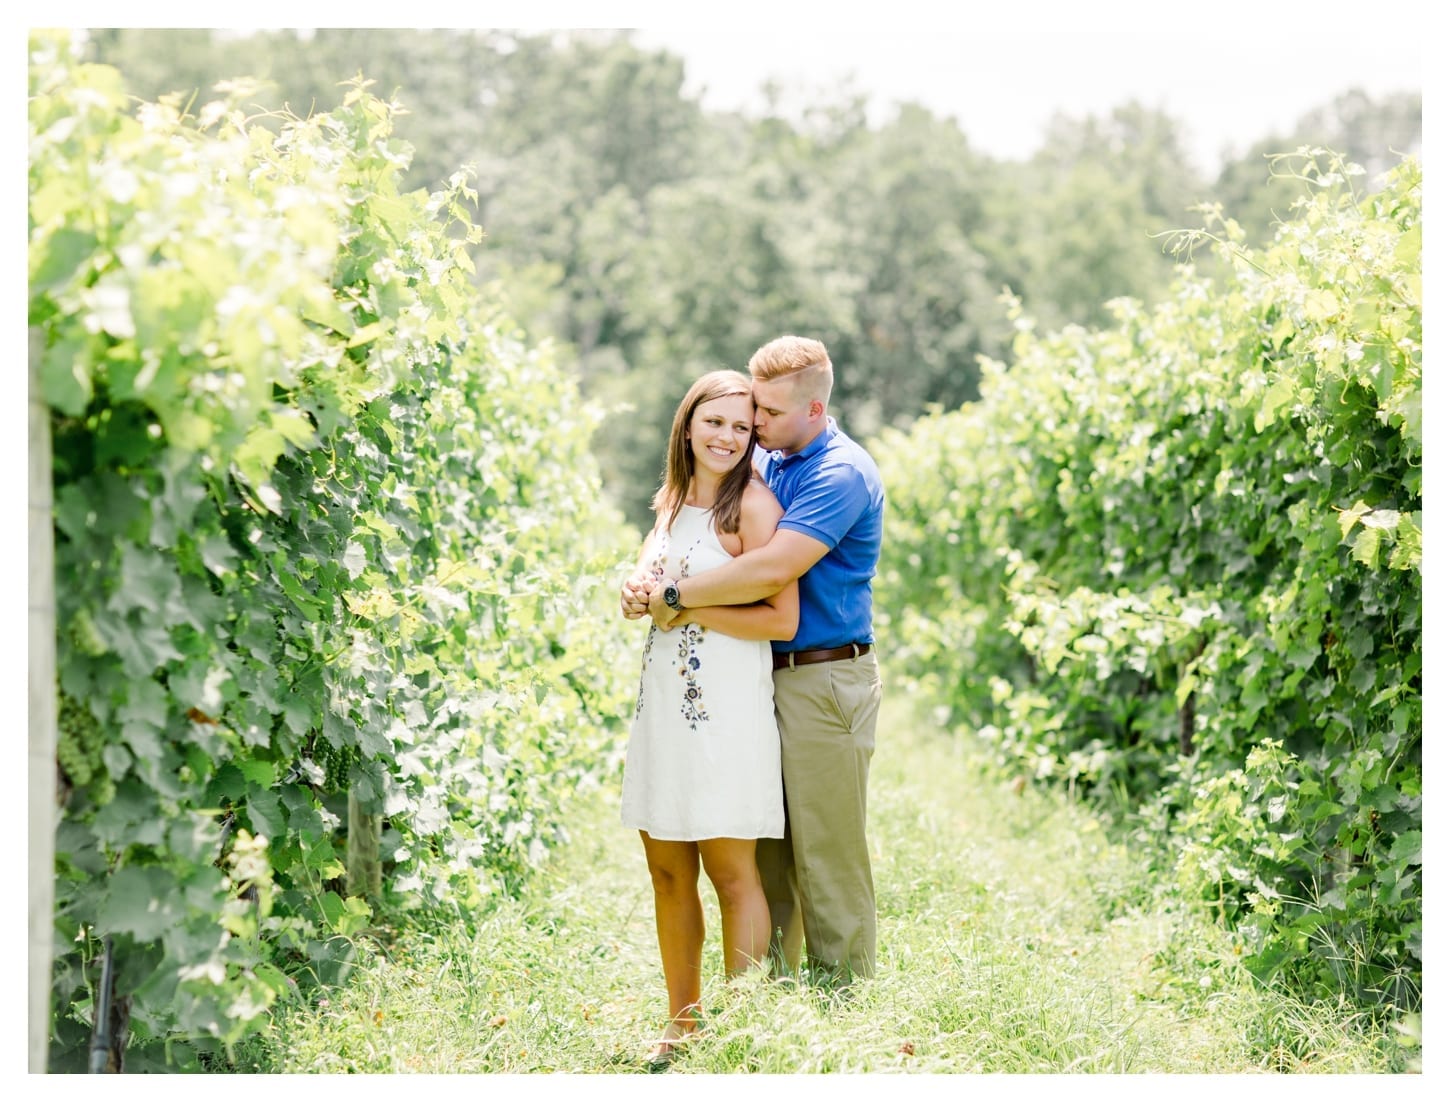 Barren Ridge Vineyards proposal photographer